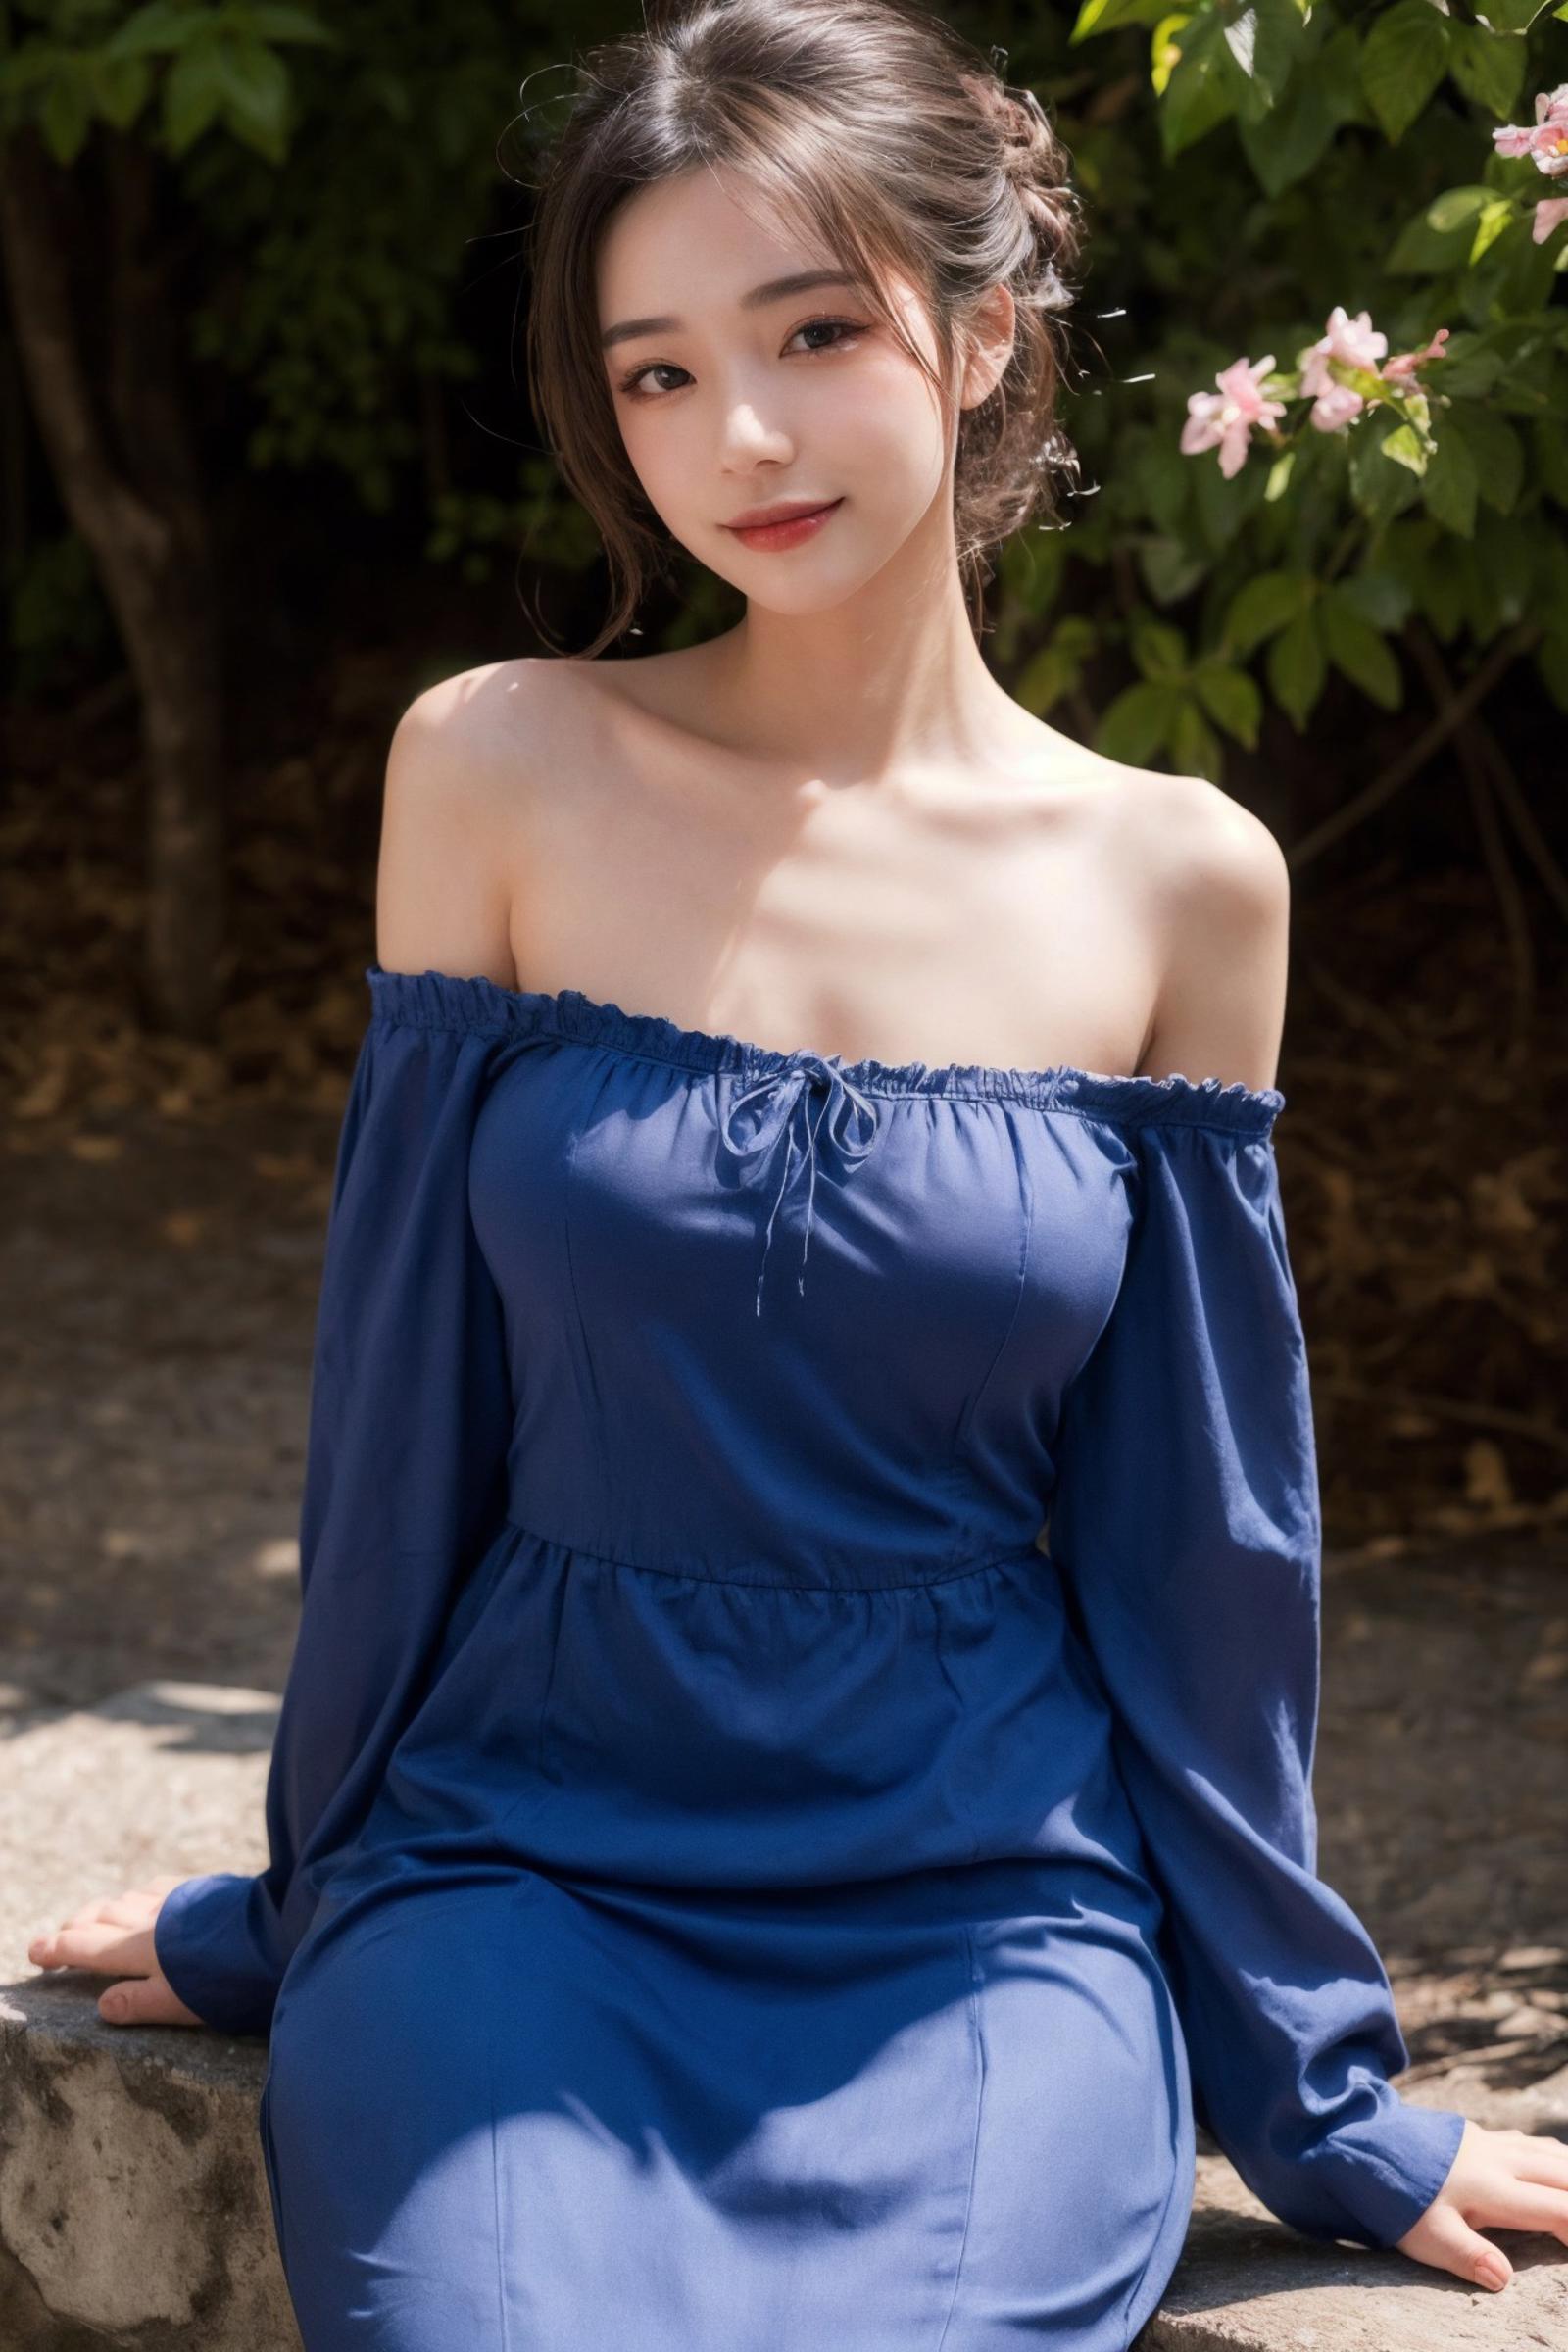 最近很火的网红蓝色蕾丝一字肩裙|Red-blue lace shoulder dress image by LeonardoUrey